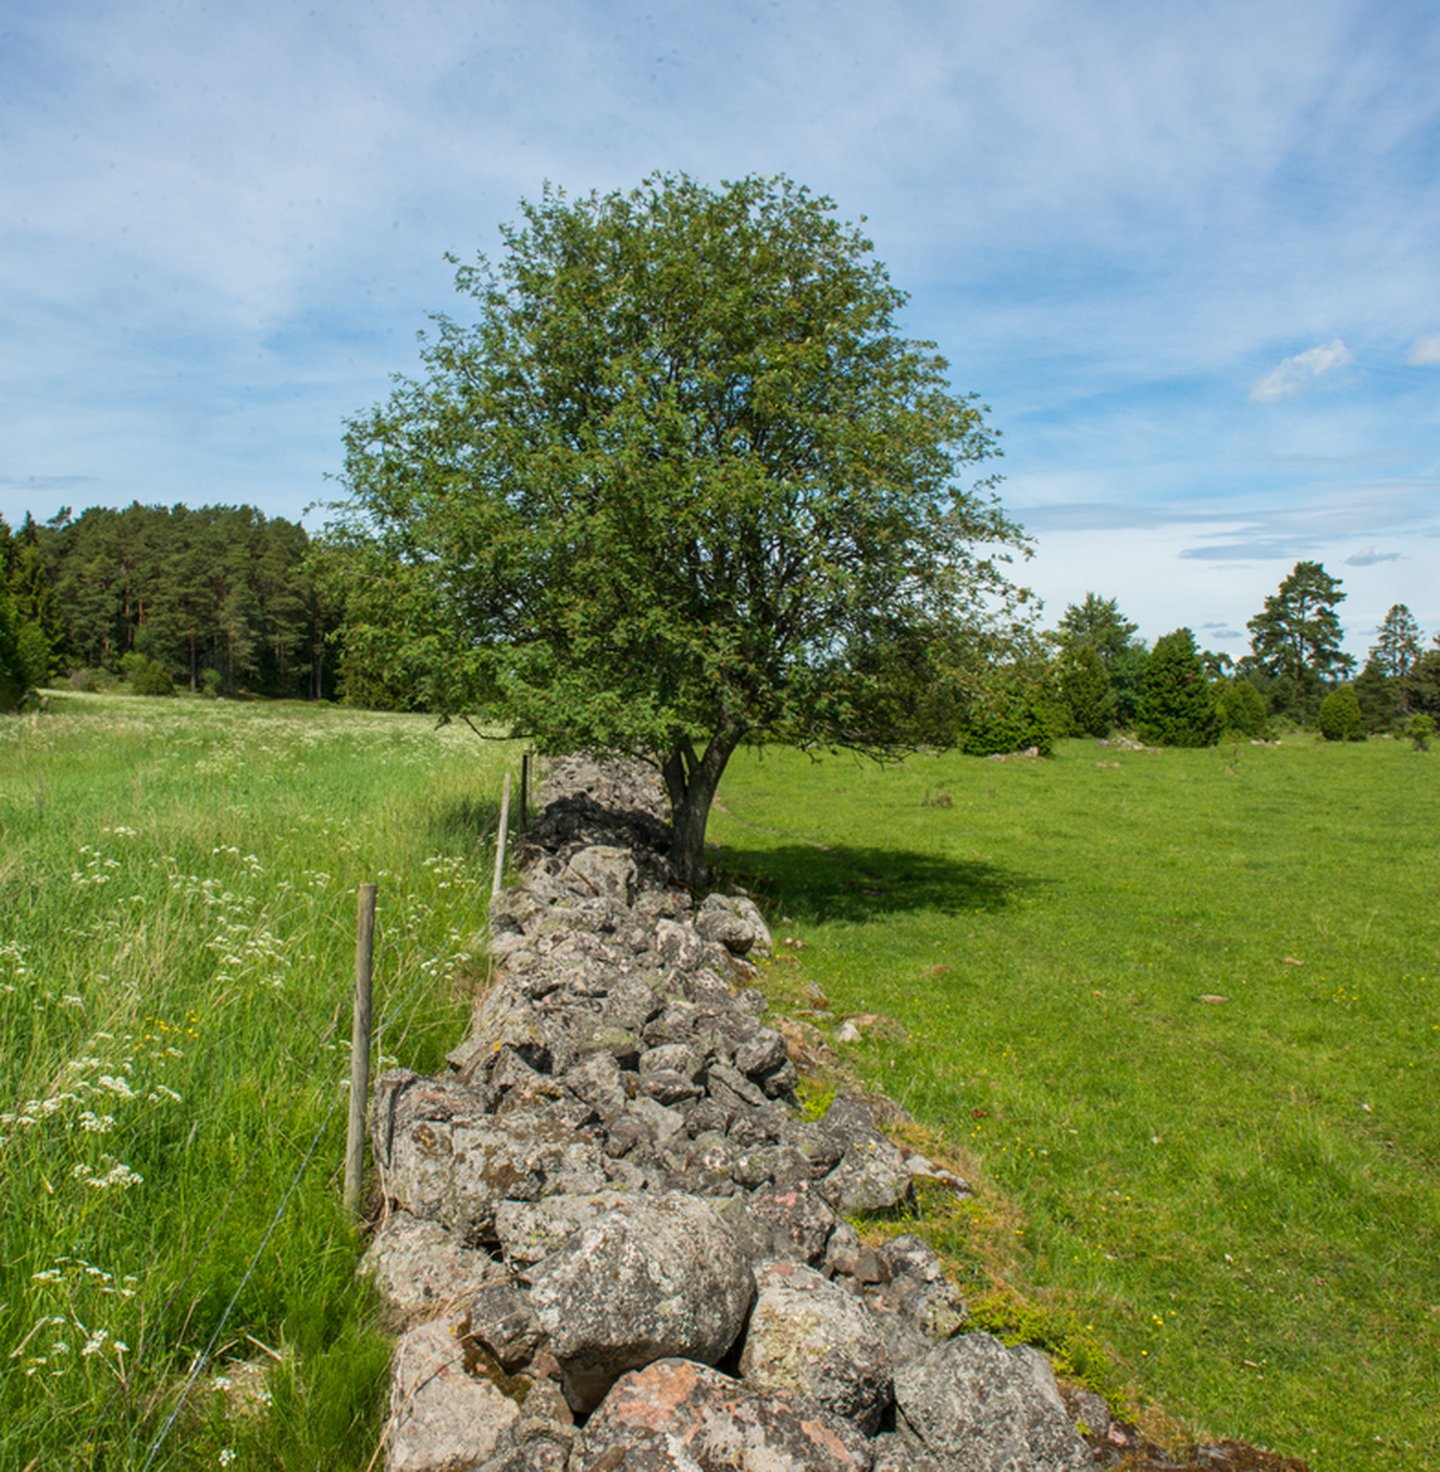 Grazed and ungrazed land in the Swedish farmland, Sweden.